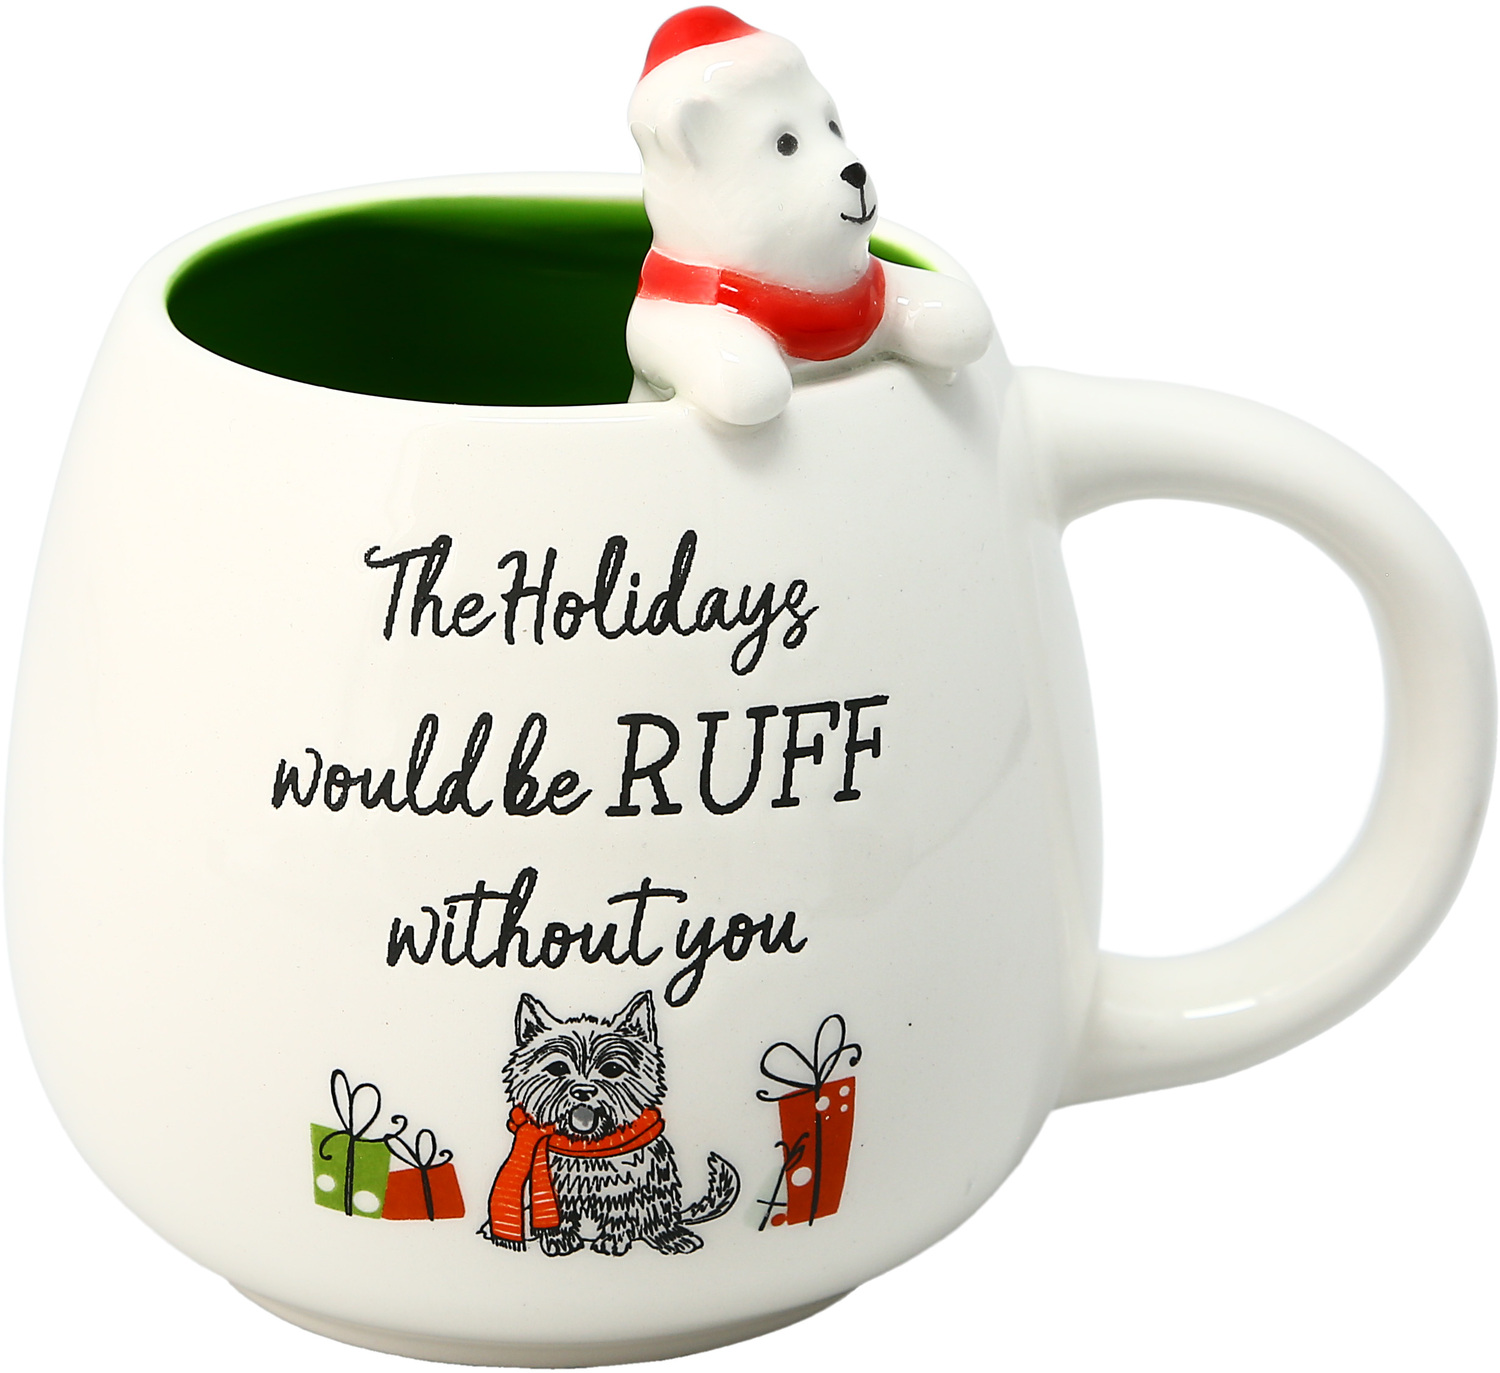 Ruff Without You by Pavilion's Pets - Ruff Without You - 15.5 oz Mug